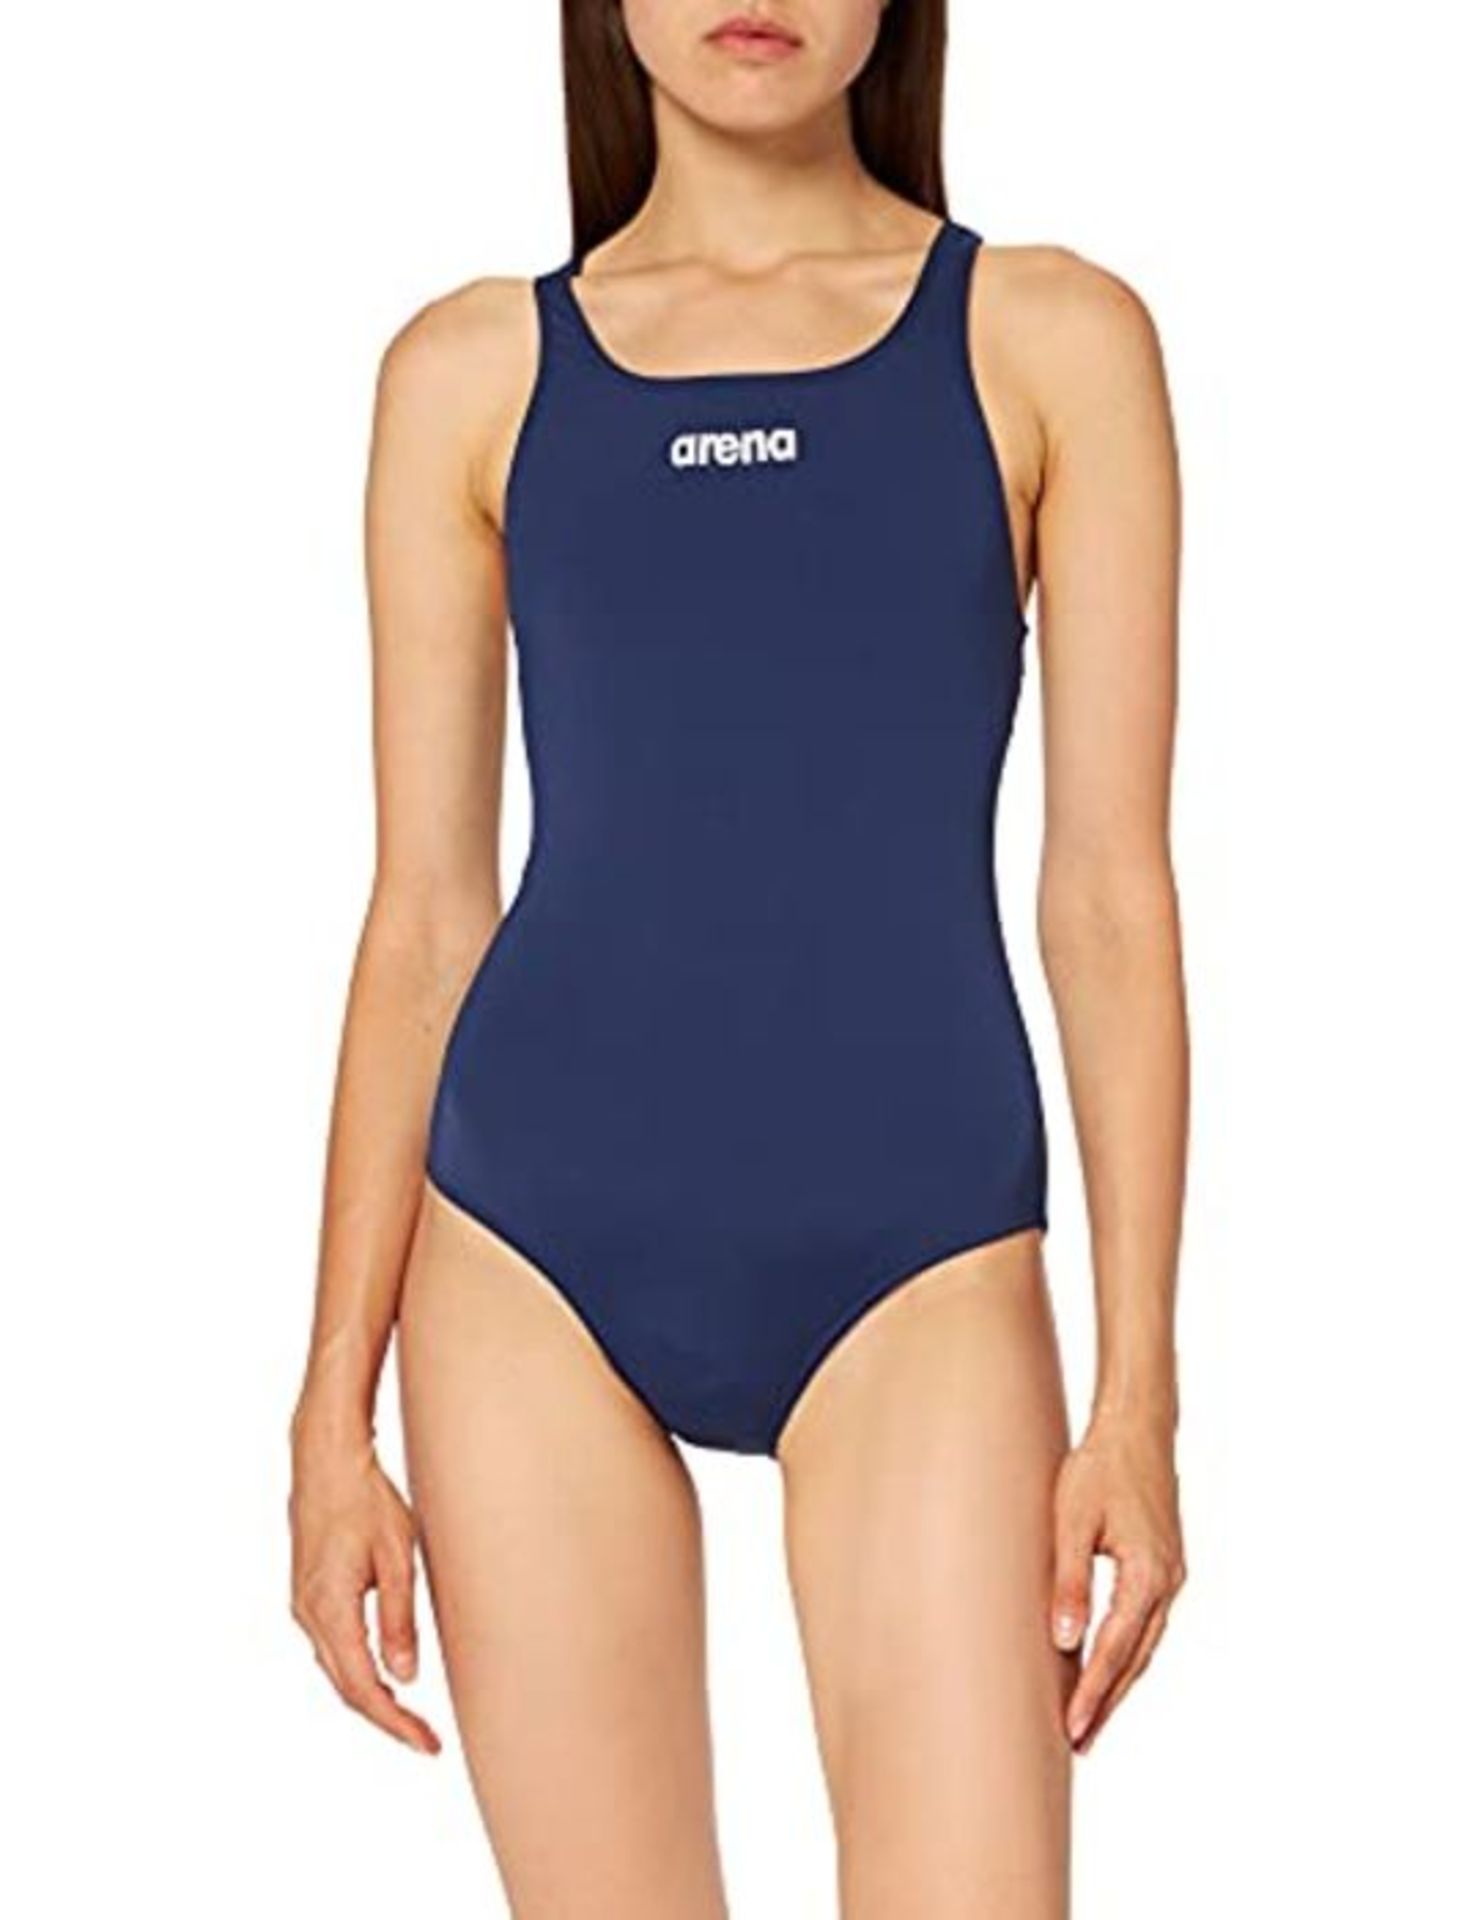 Arena Women's Sports Solid Swim Pro Swimsuit, Navy/White, Size 38